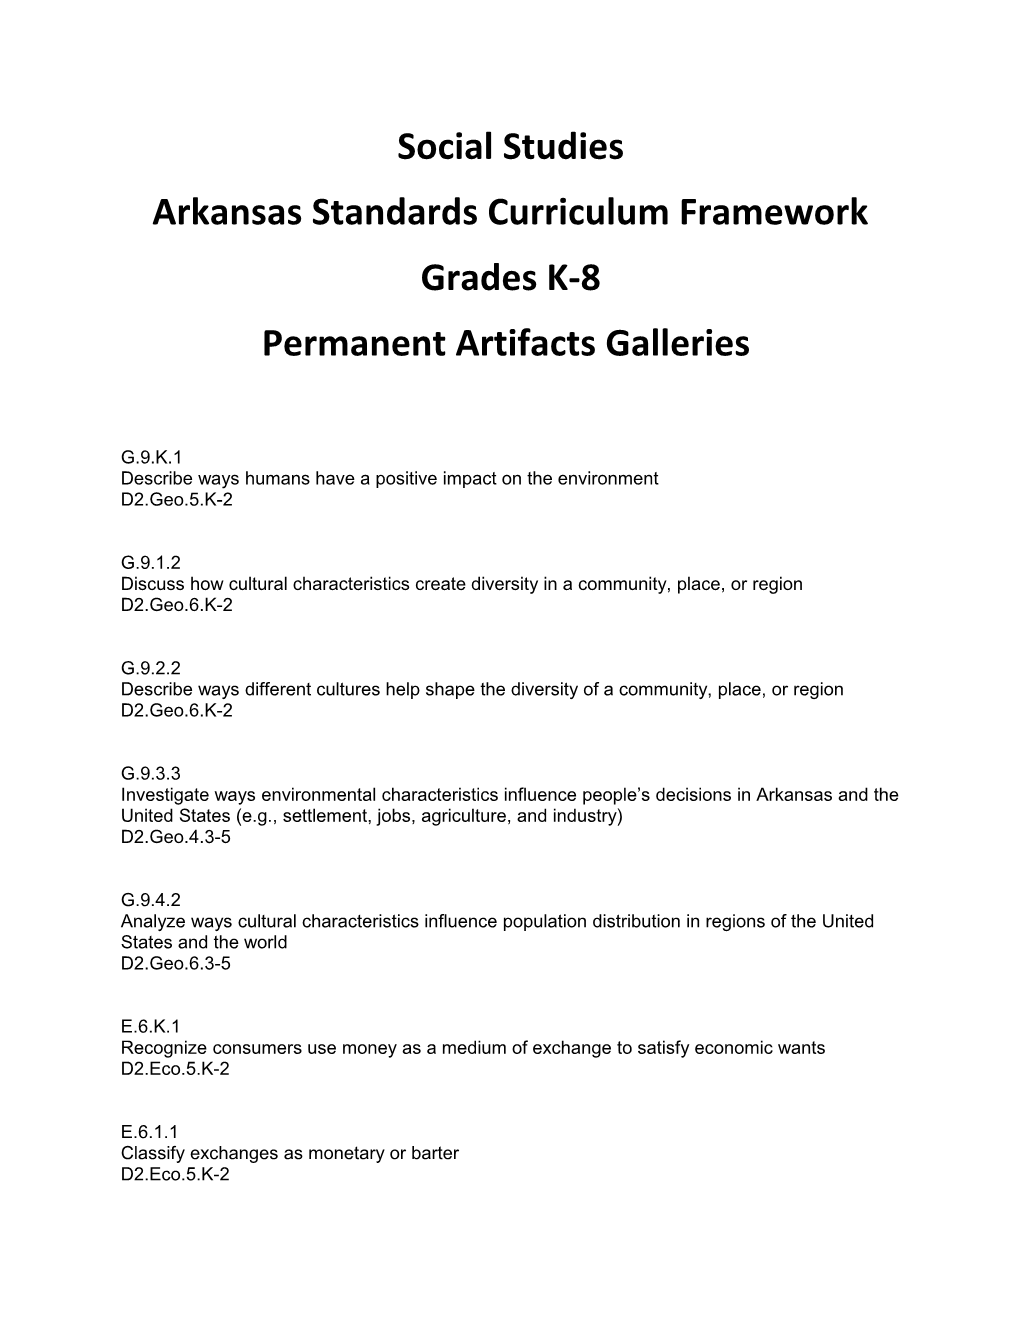 Arkansas Standards Curriculum Framework